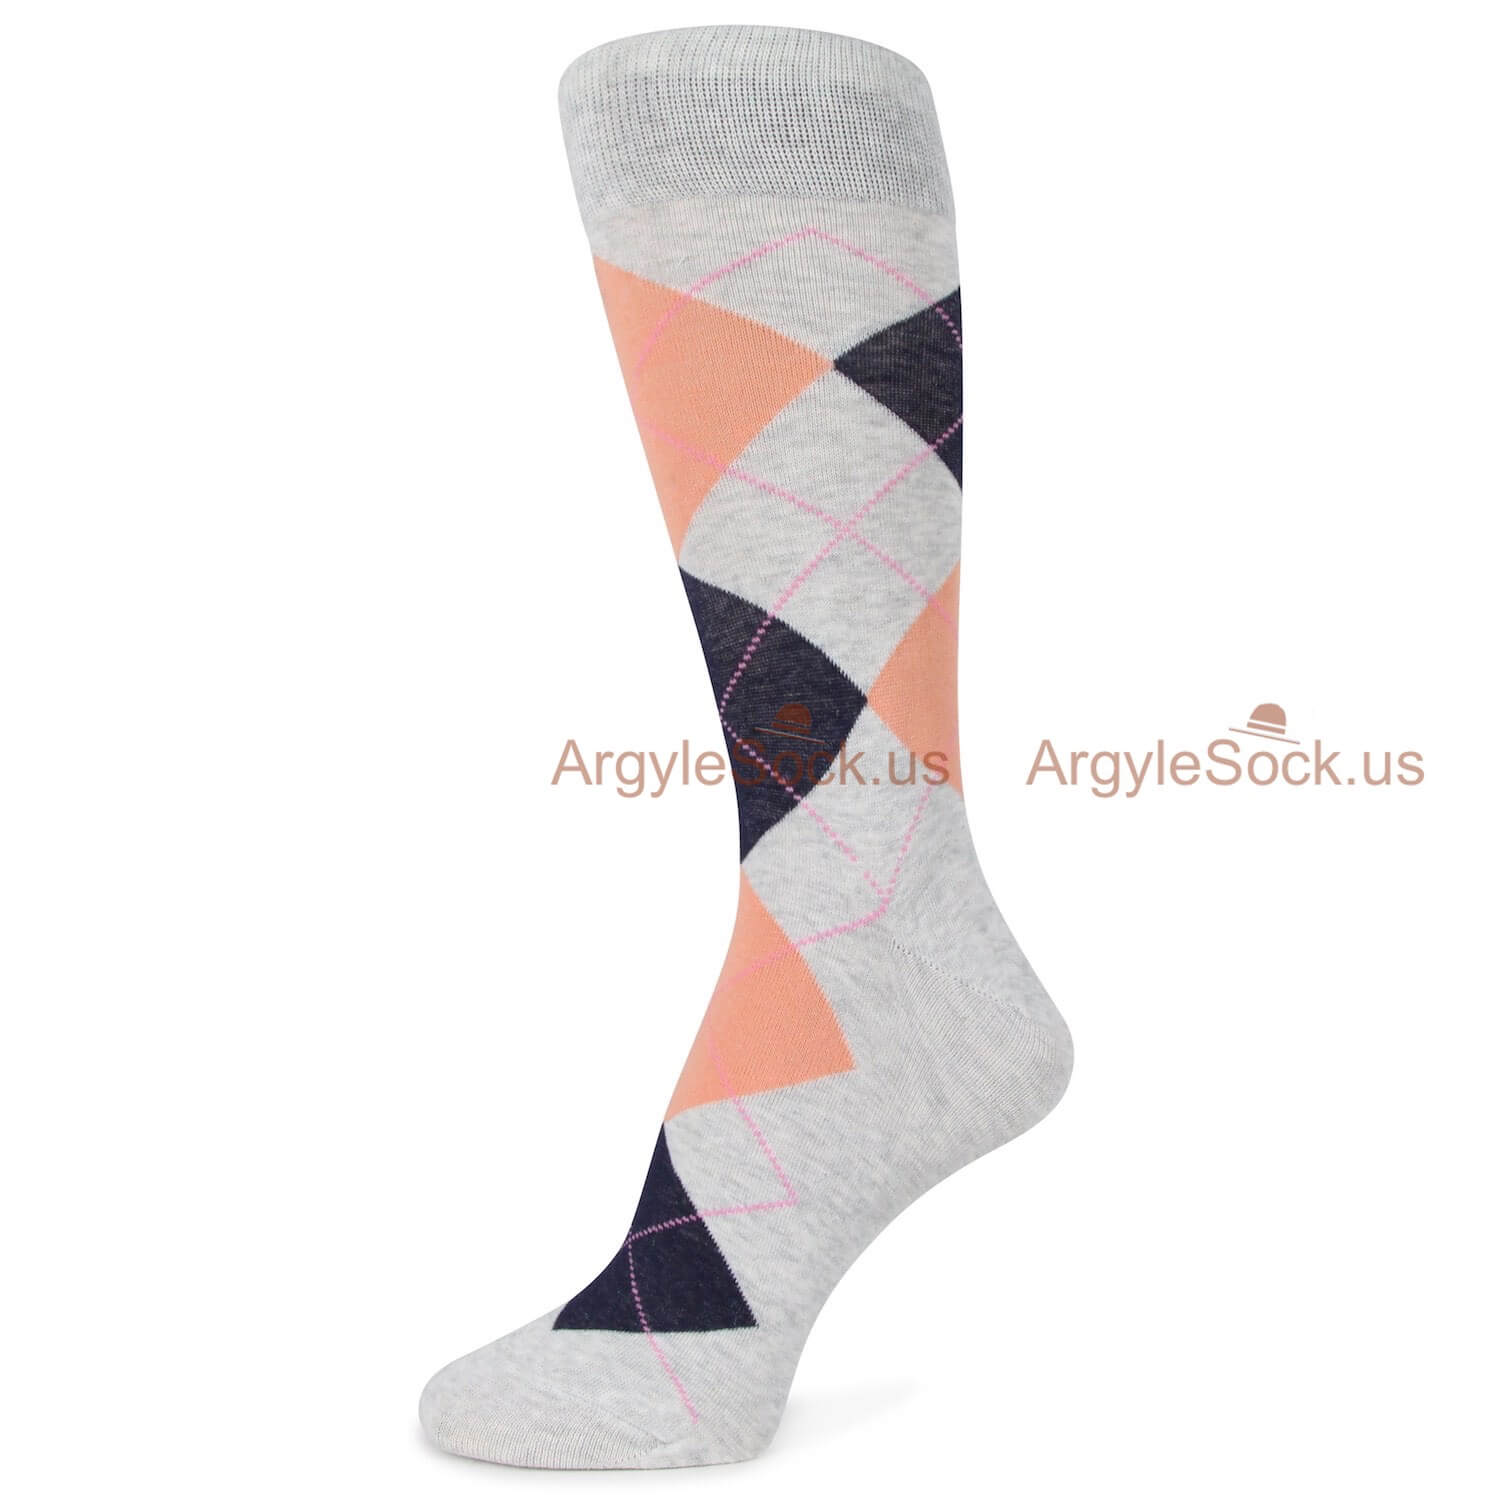 Grey Black and Peach Argyle Socks For Men